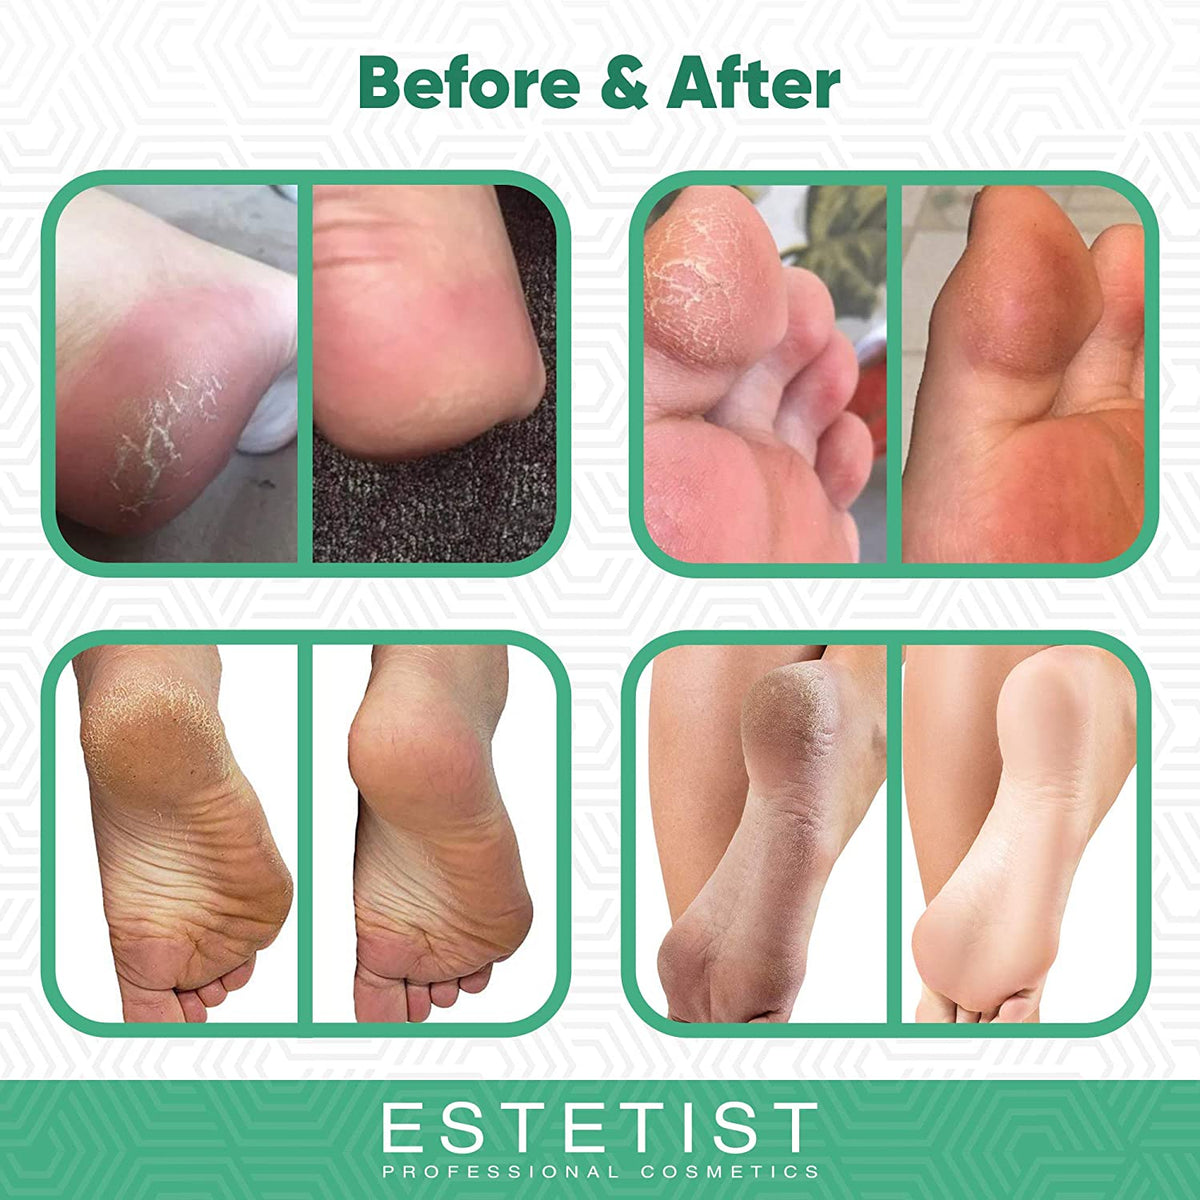 Tea Tree Foot Cream - Antifungal Foot Treatment freeshipping - ESTETIST LLC